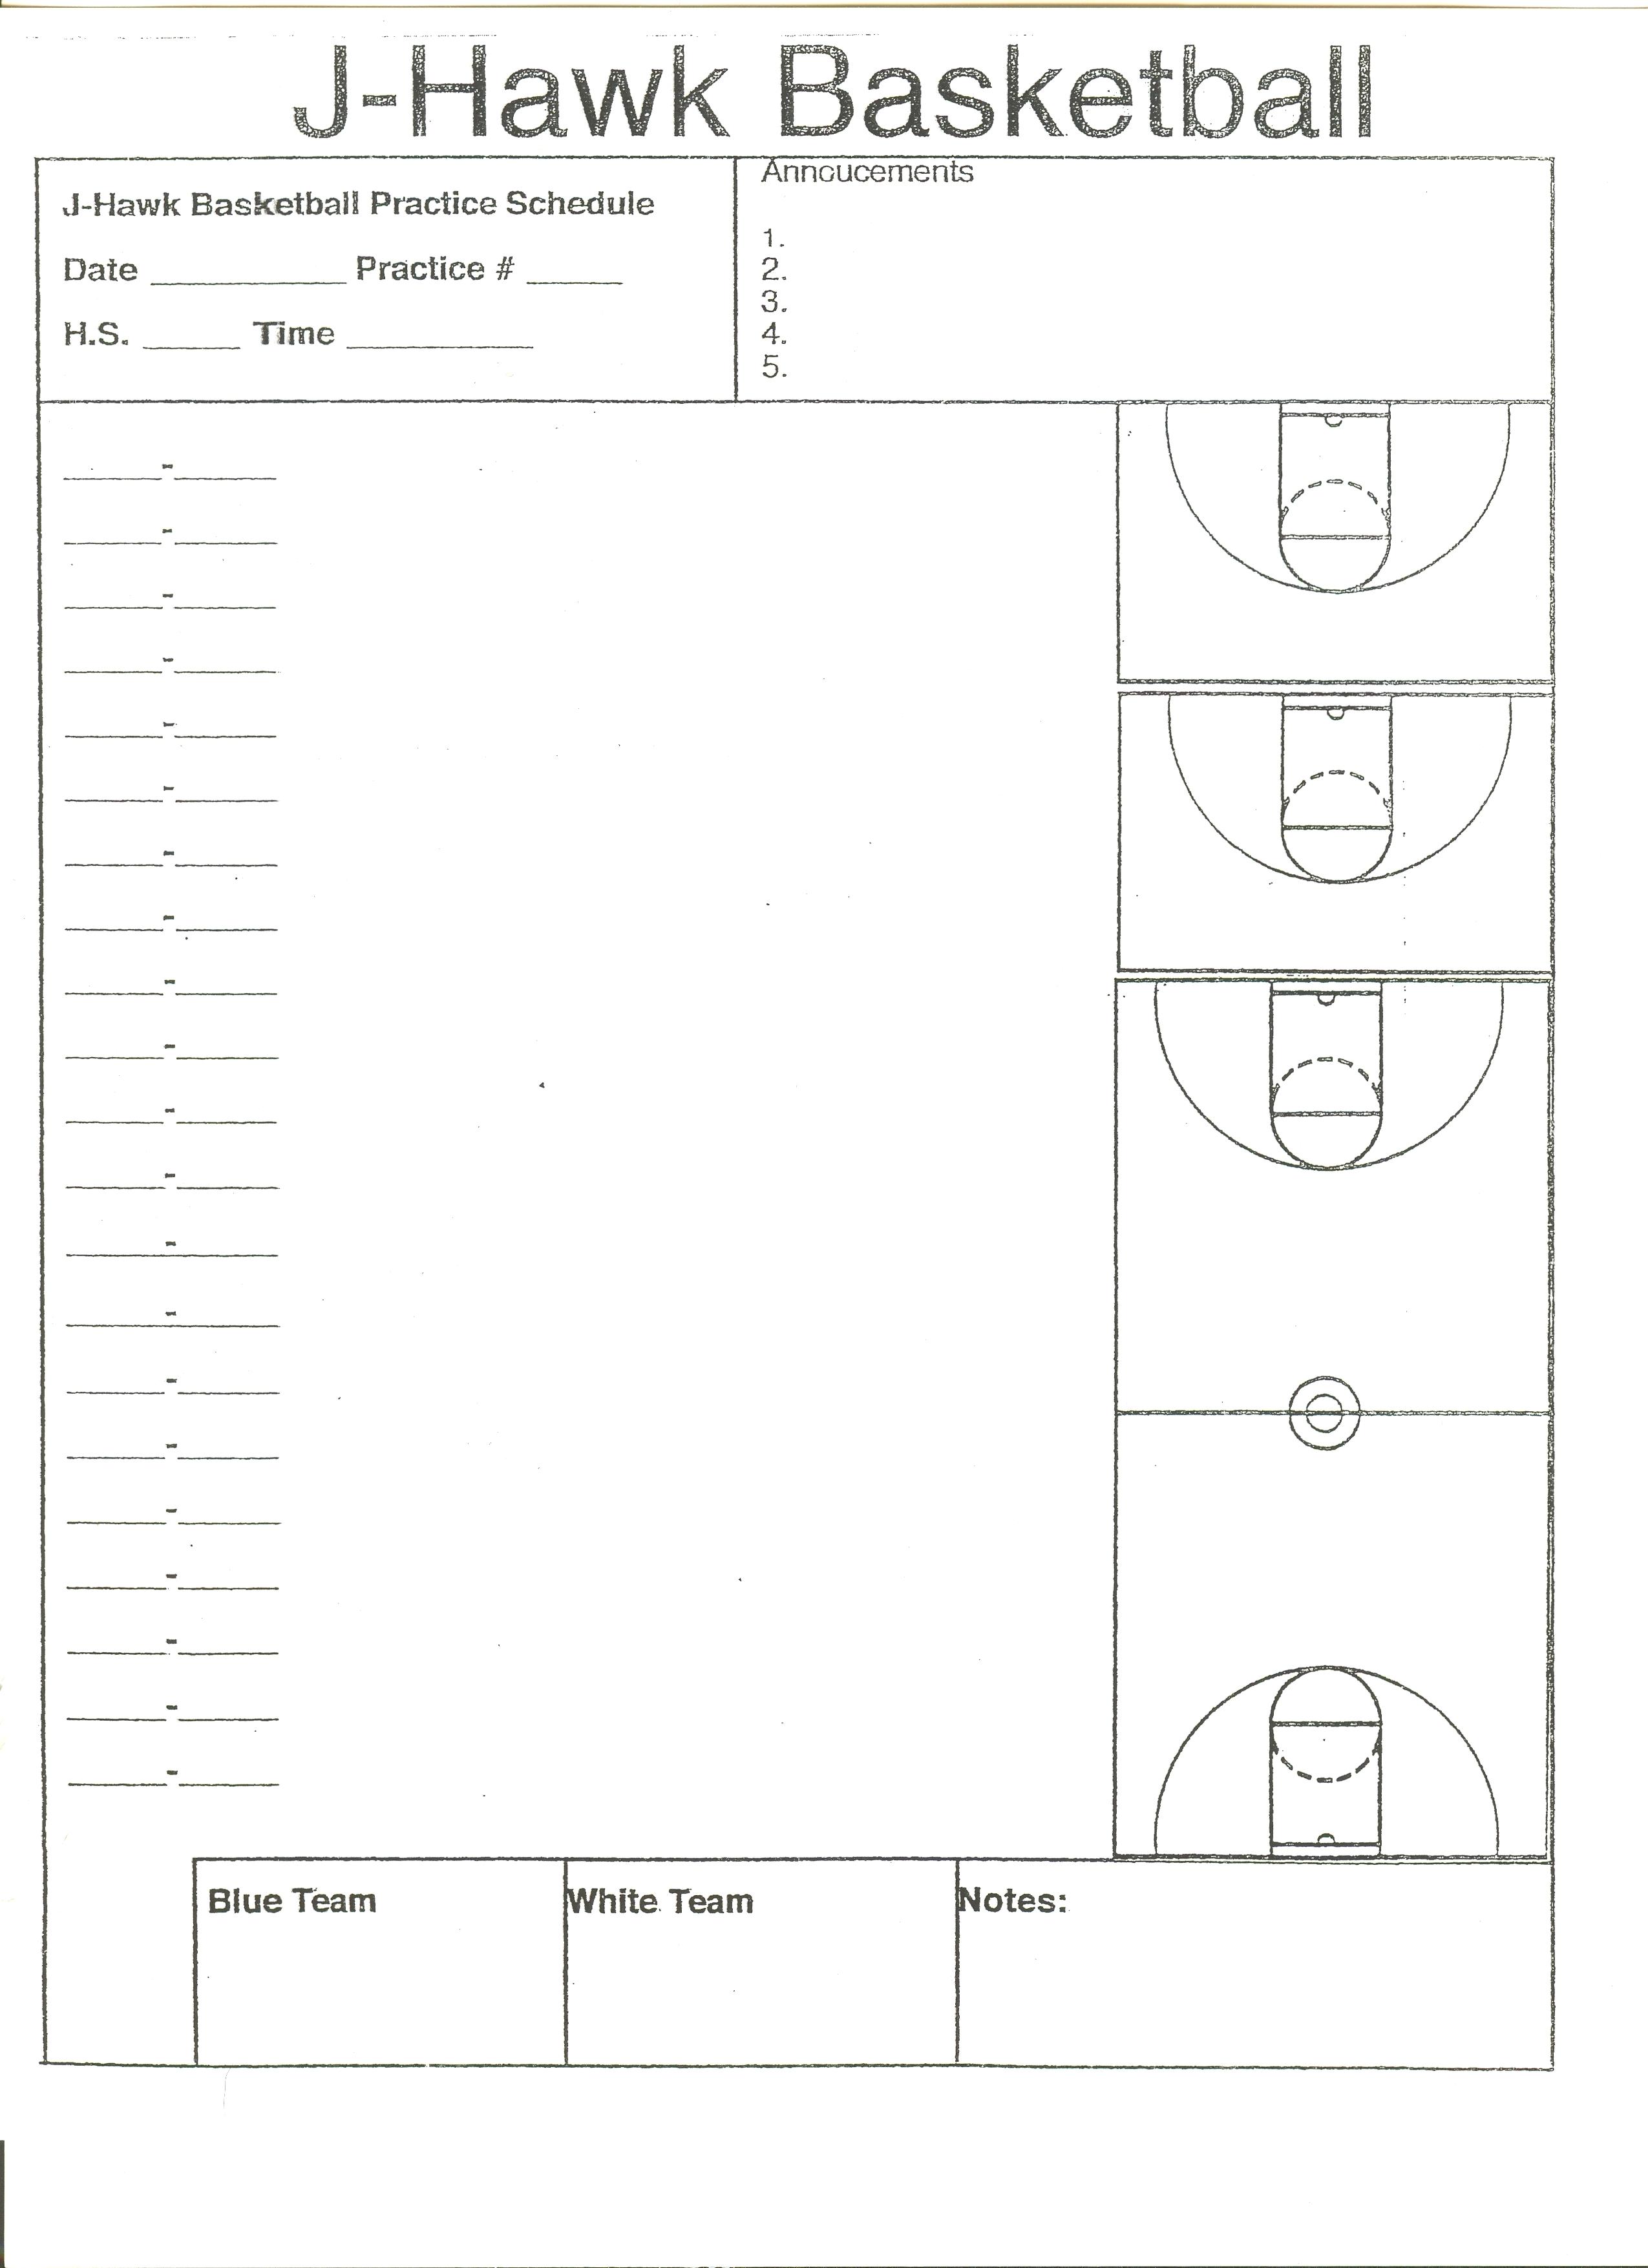 Practice plan. Basketball Daily Plan Practice. Blank diagram Sheets for Basketball coaches.